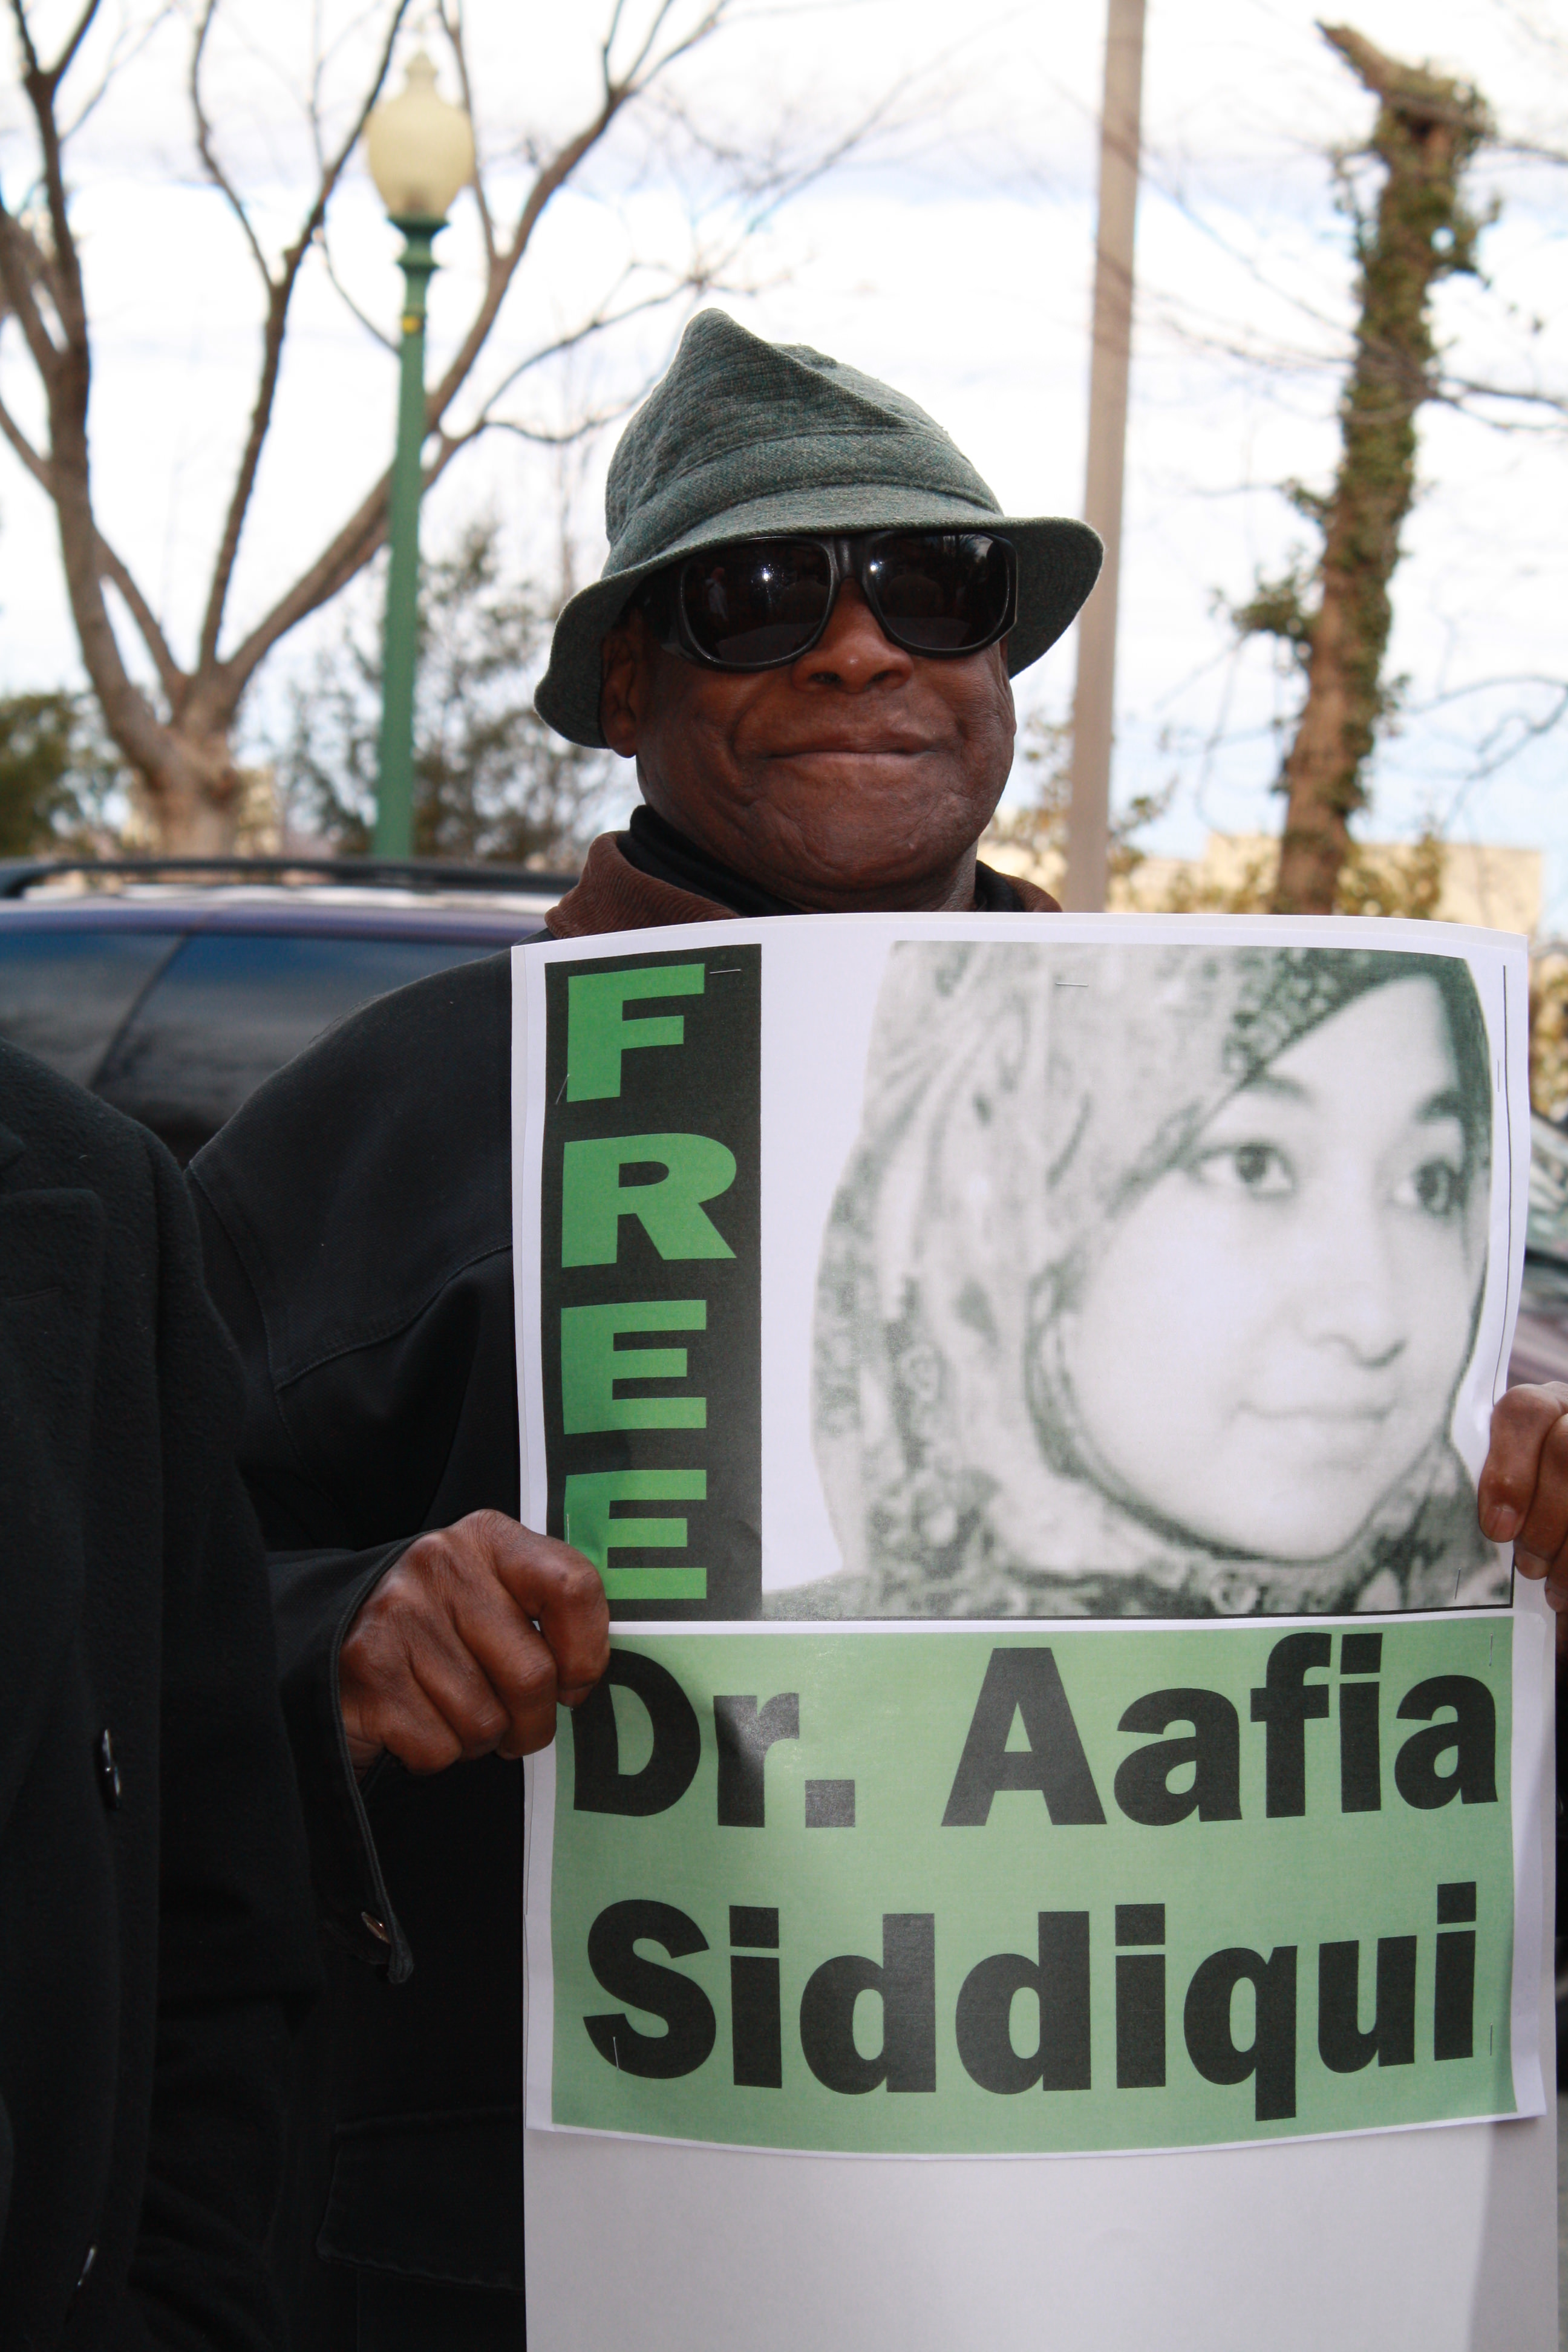 Justice for Aafia Siddiqui